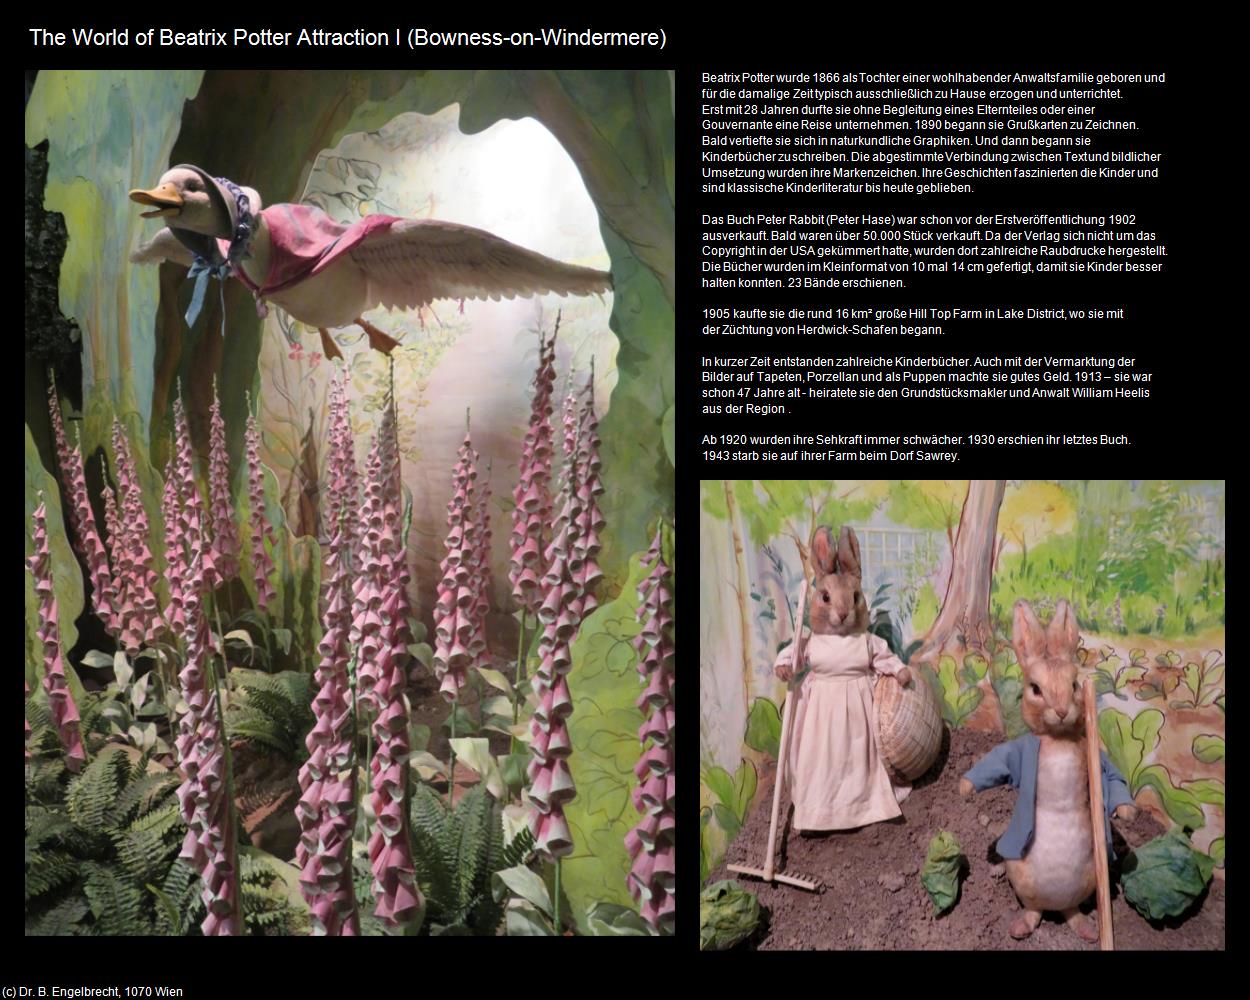 The World of Beatrix Potter Attraction I (Bowness-on-Windermere) (Bowness-on-Windermere, England) in Kulturatlas-ENGLAND und WALES